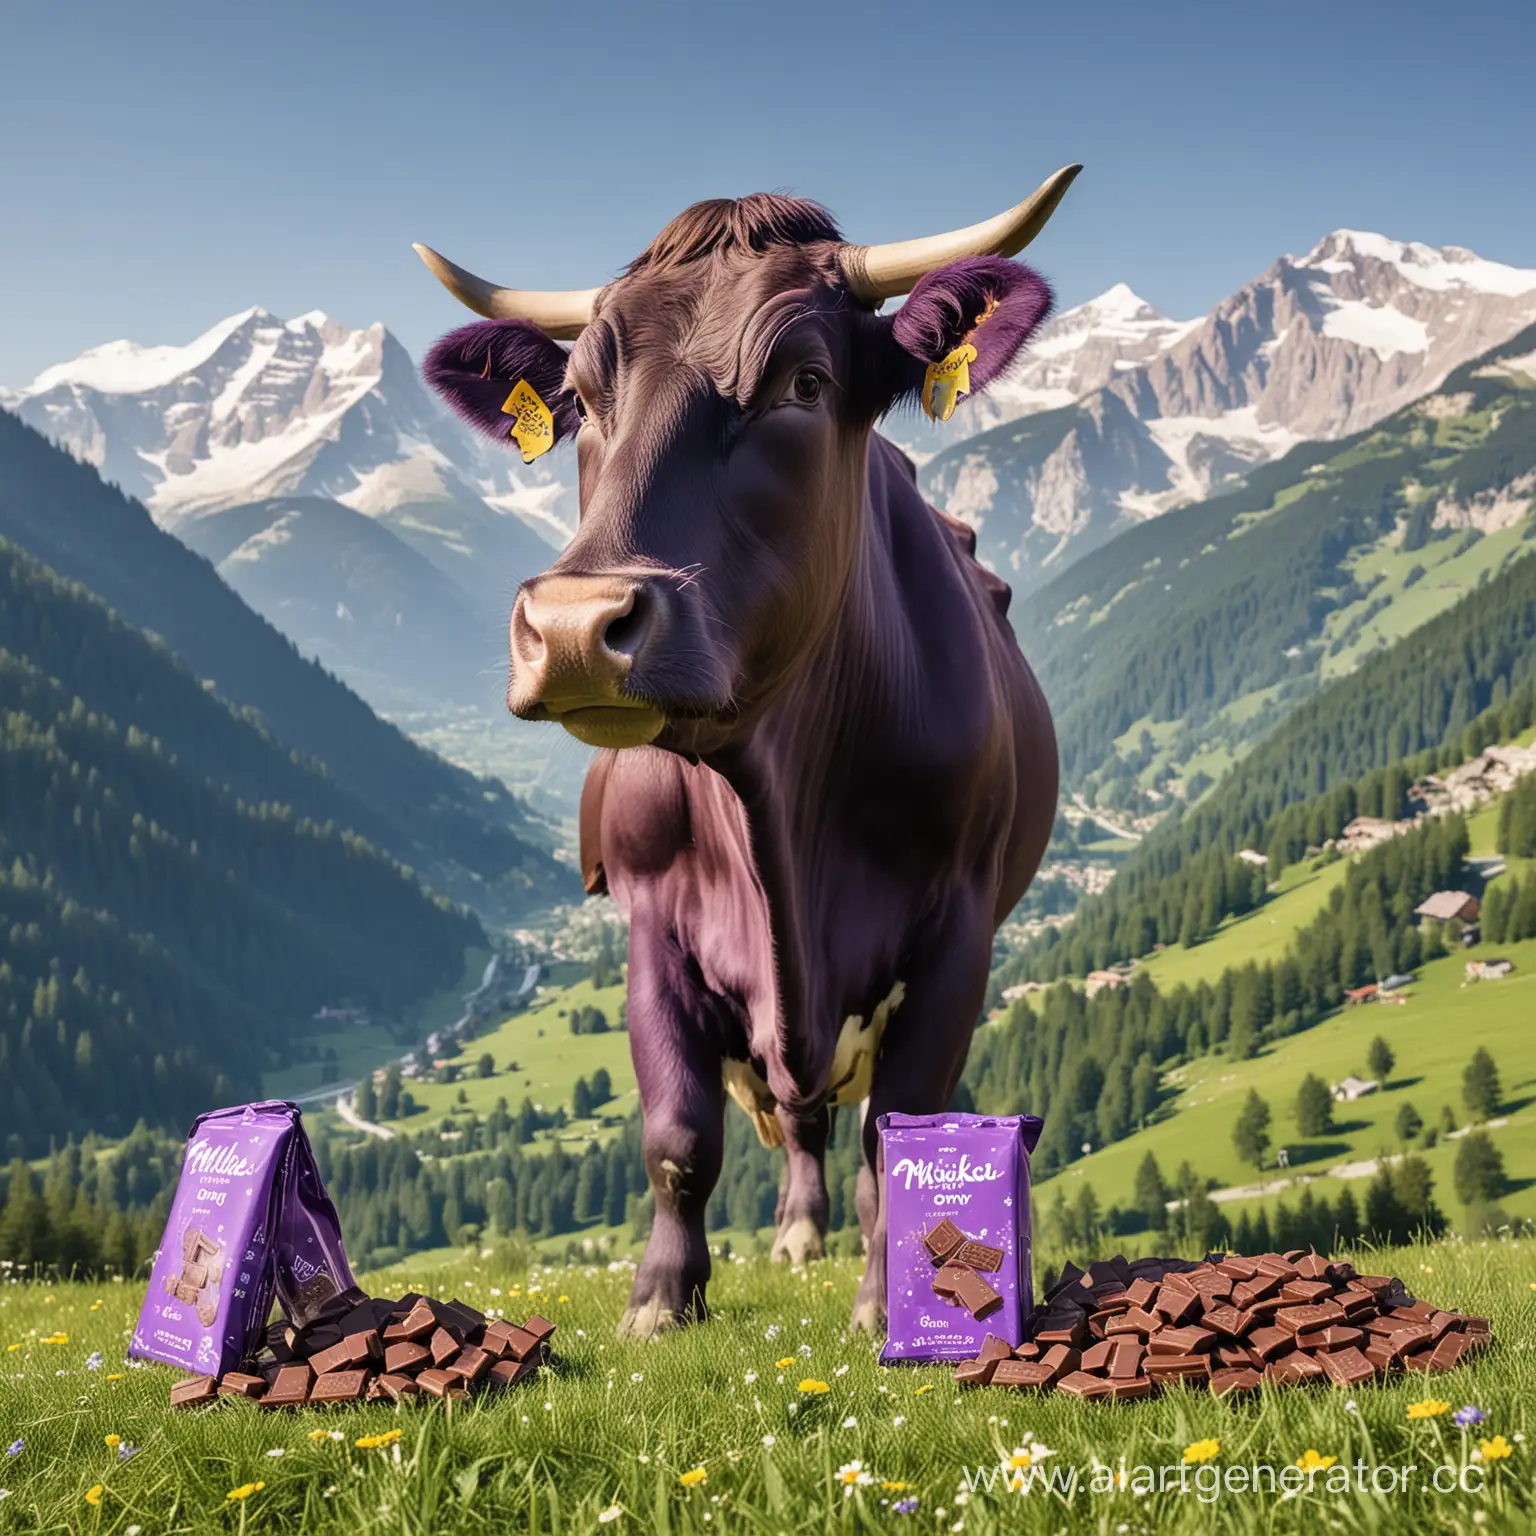 Alpine-Scene-Featuring-Milka-Purple-Cow-with-Chocolate